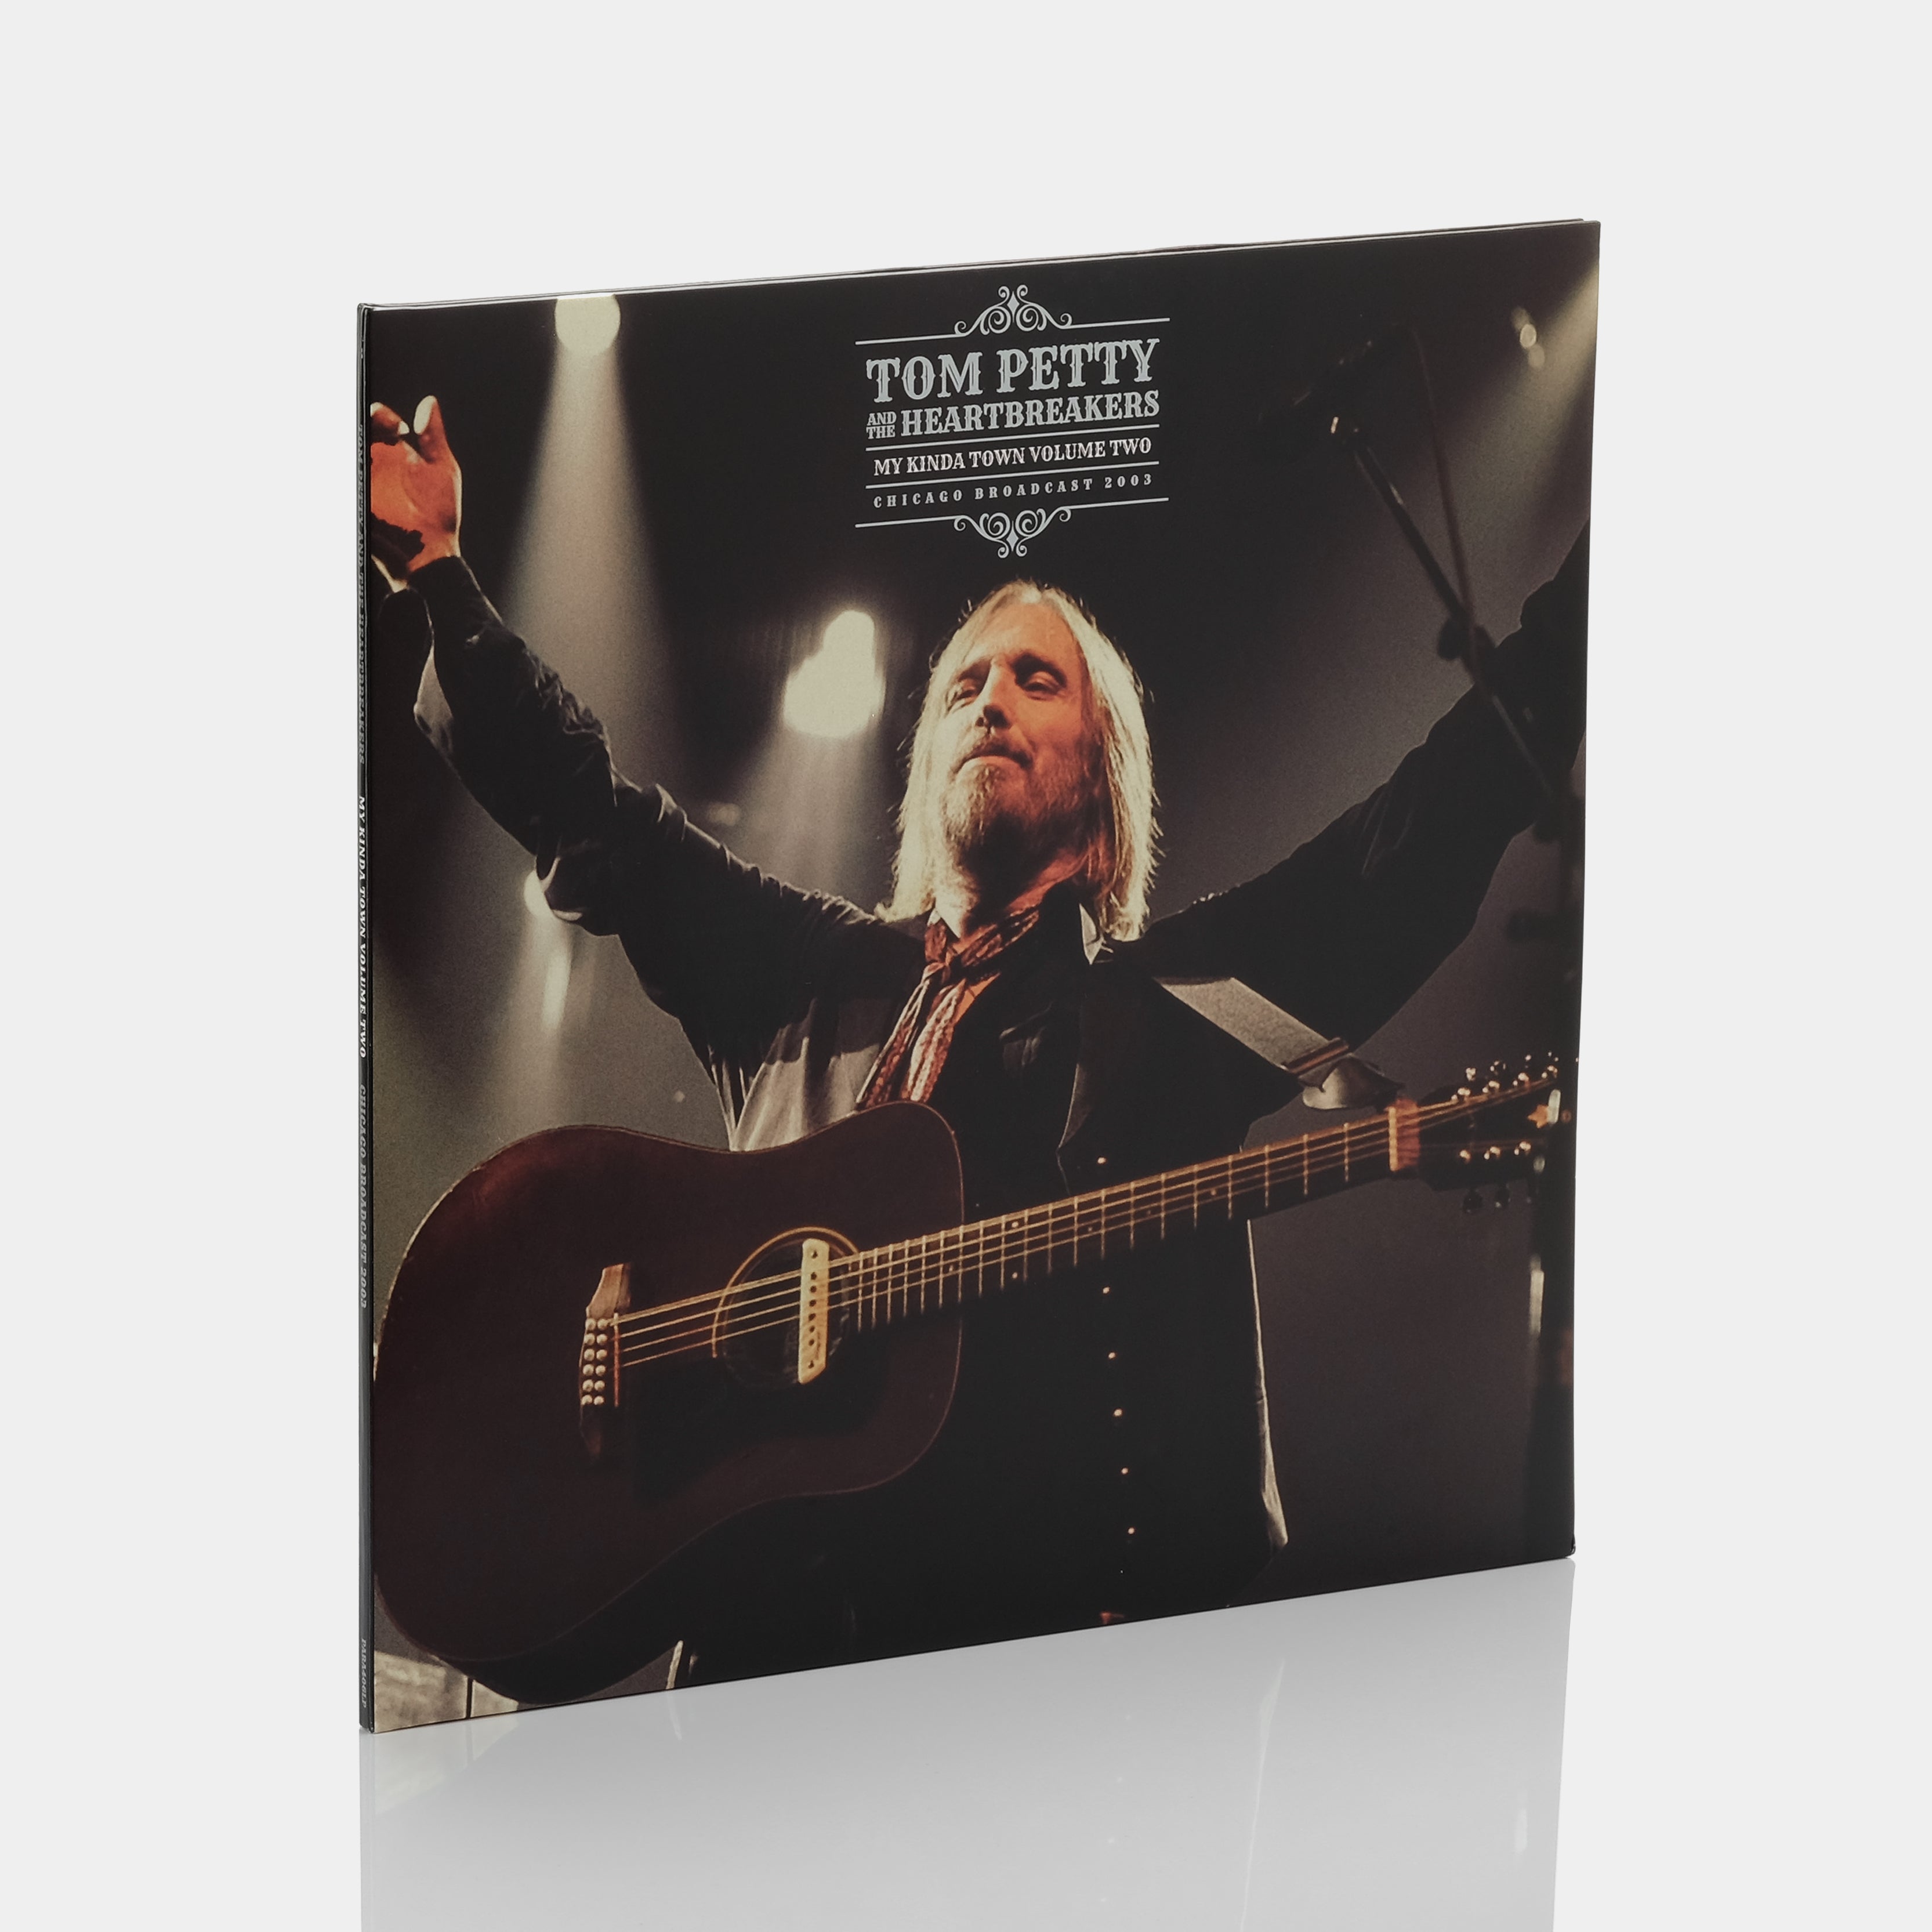 Tom Petty - Heartbreakers (My Kinda Town Volume Two, Chicago Broadcast 2003) 2xLP Vinyl Record